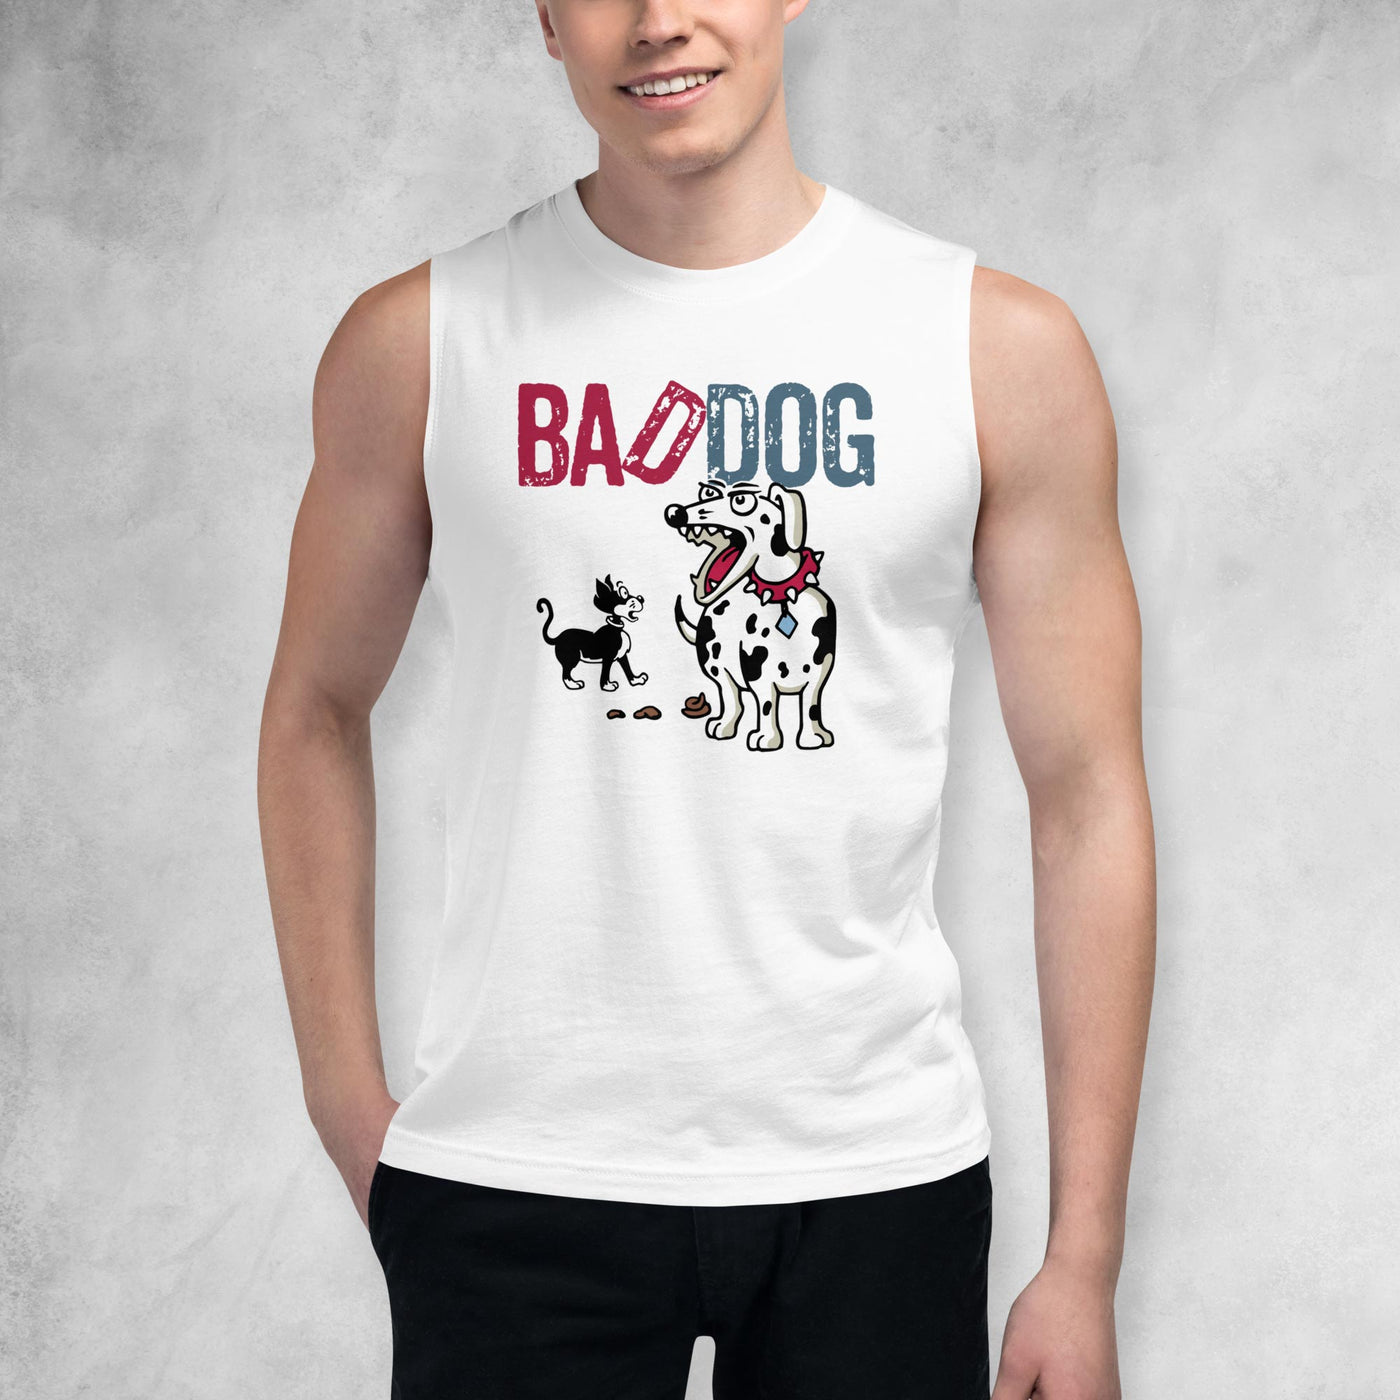 Bad Dog Phew - Muscle Shirt